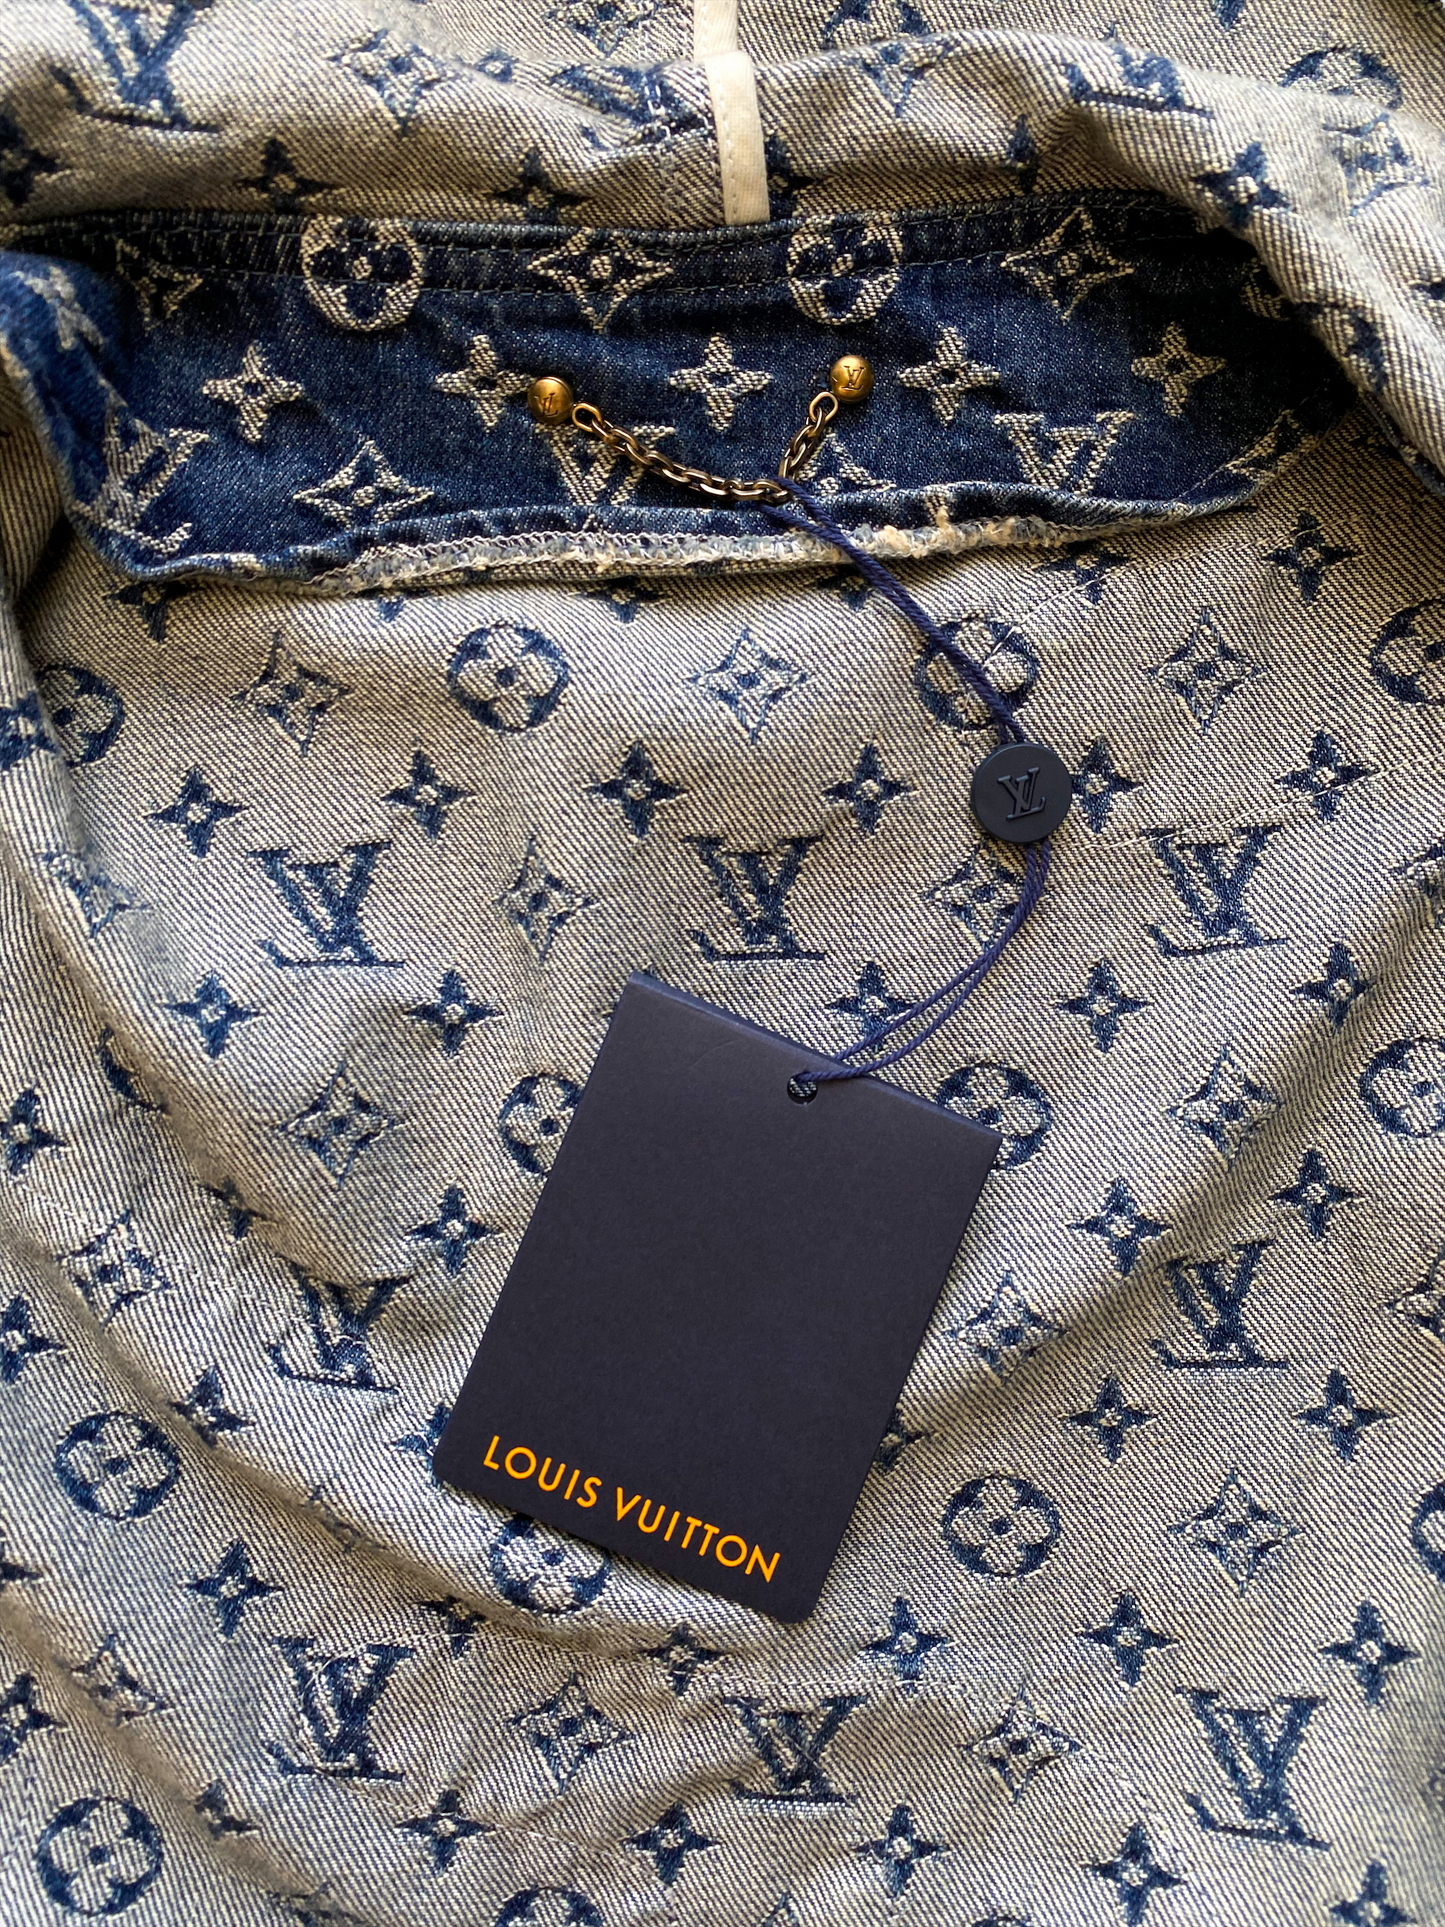 Shop Louis Vuitton Monogram hooded denim jacket by KICKSSTORE